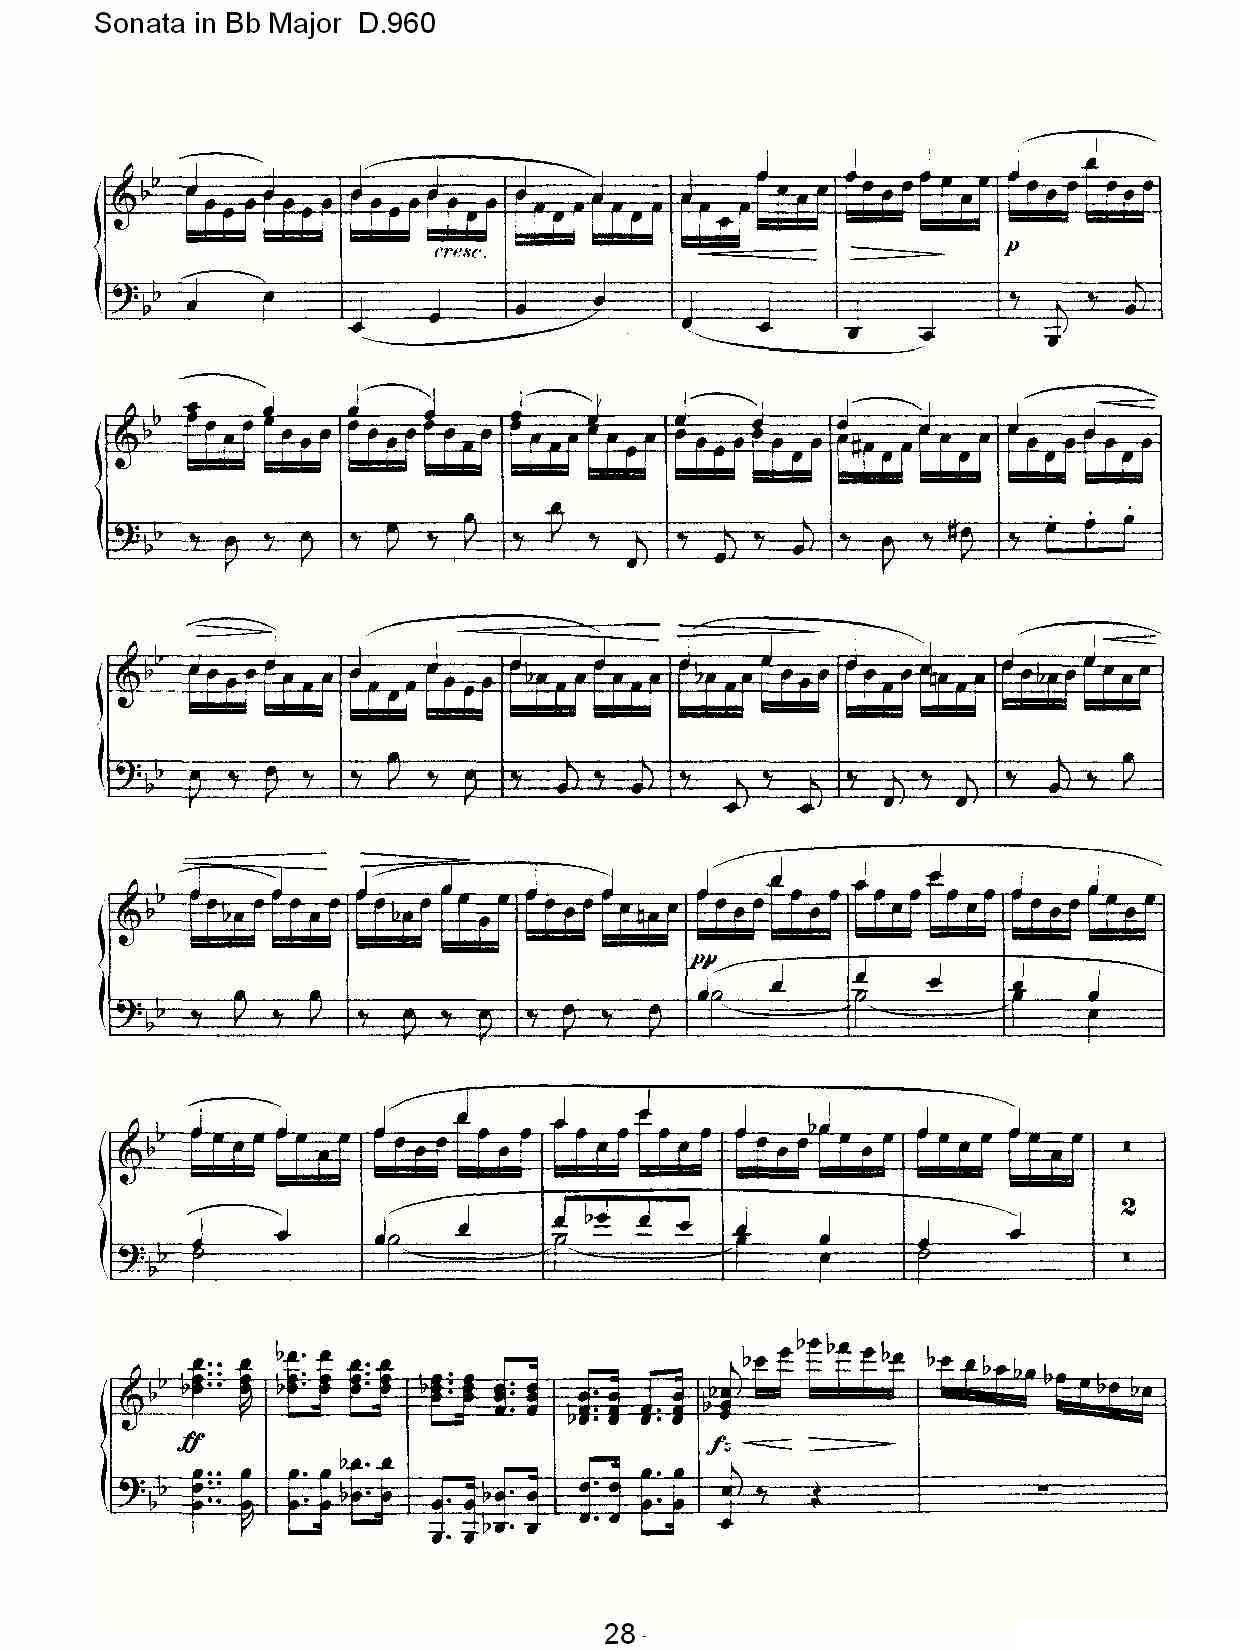 Sonata in Bb Major D.960（Bb大调奏鸣曲 D.960）钢琴曲谱（图28）